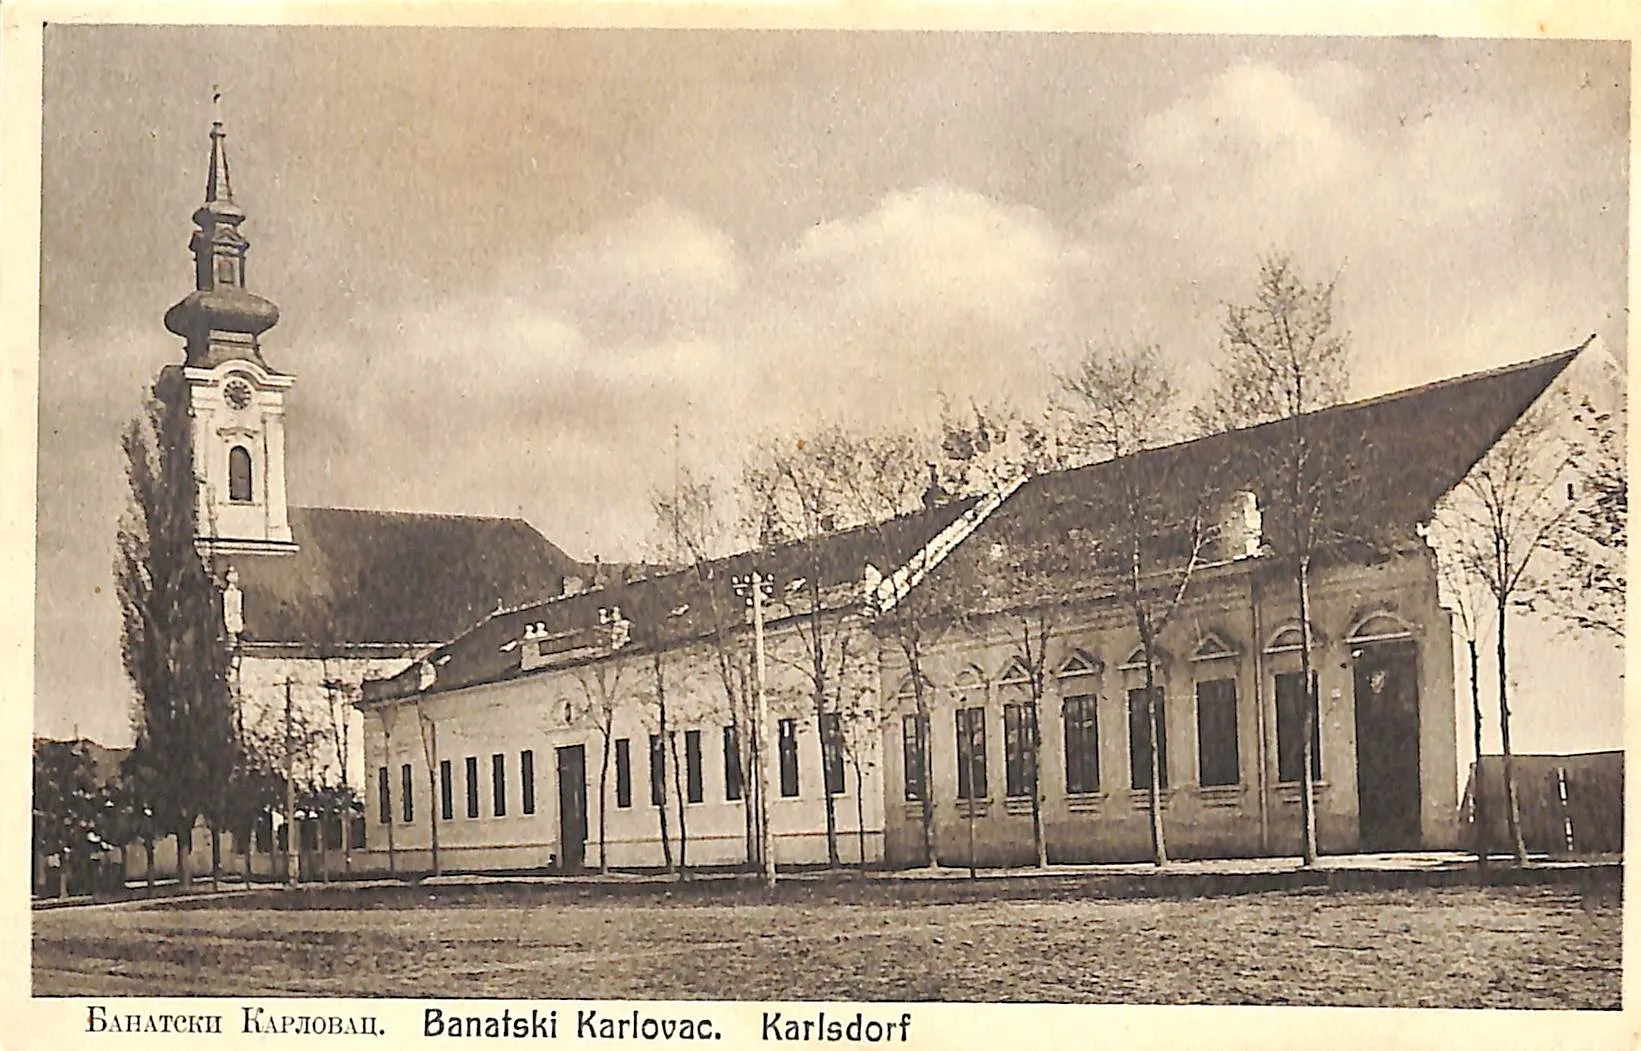 Photo showing: Banatski Karlovac on the postcard